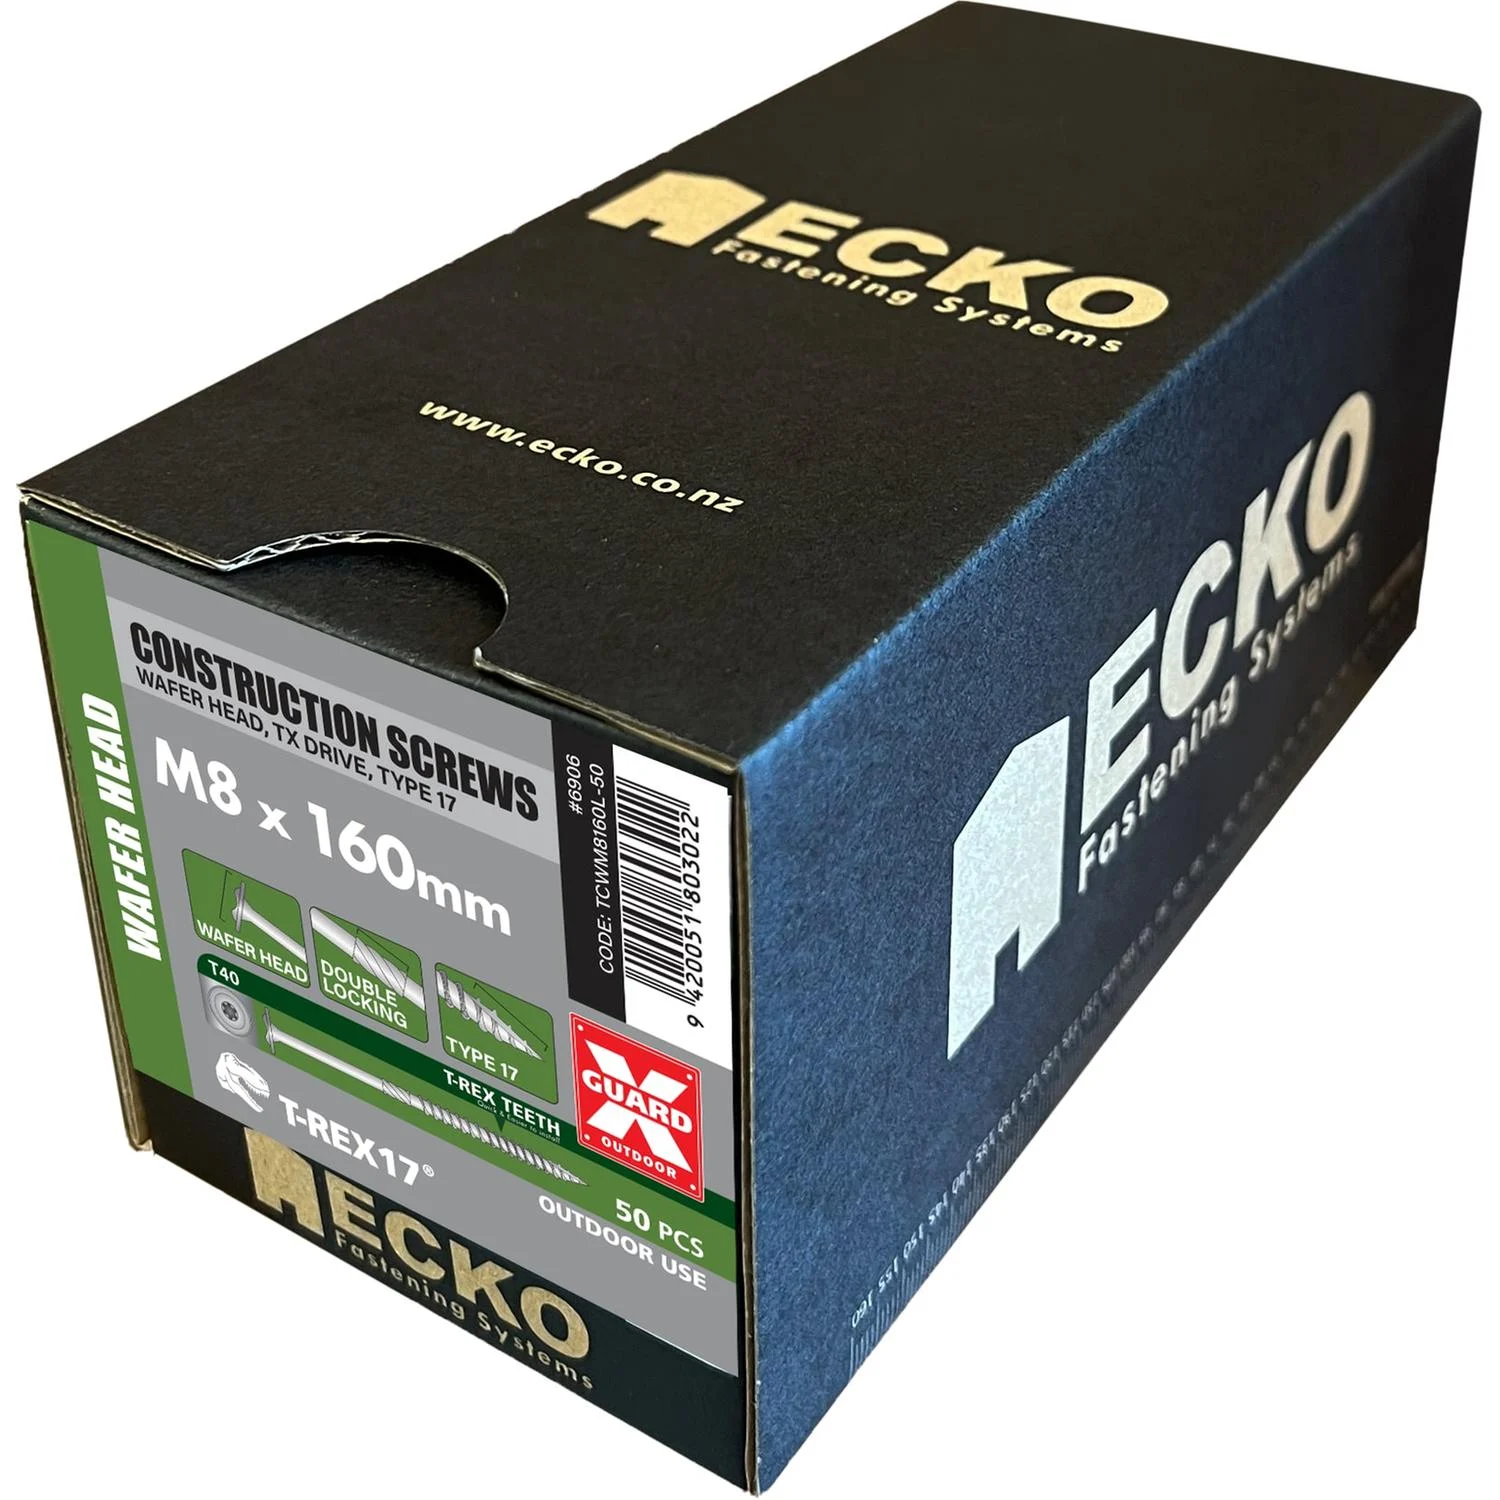 Ecko T-Rex17 Construction Screws M8 X 160Mm (500 Pack)